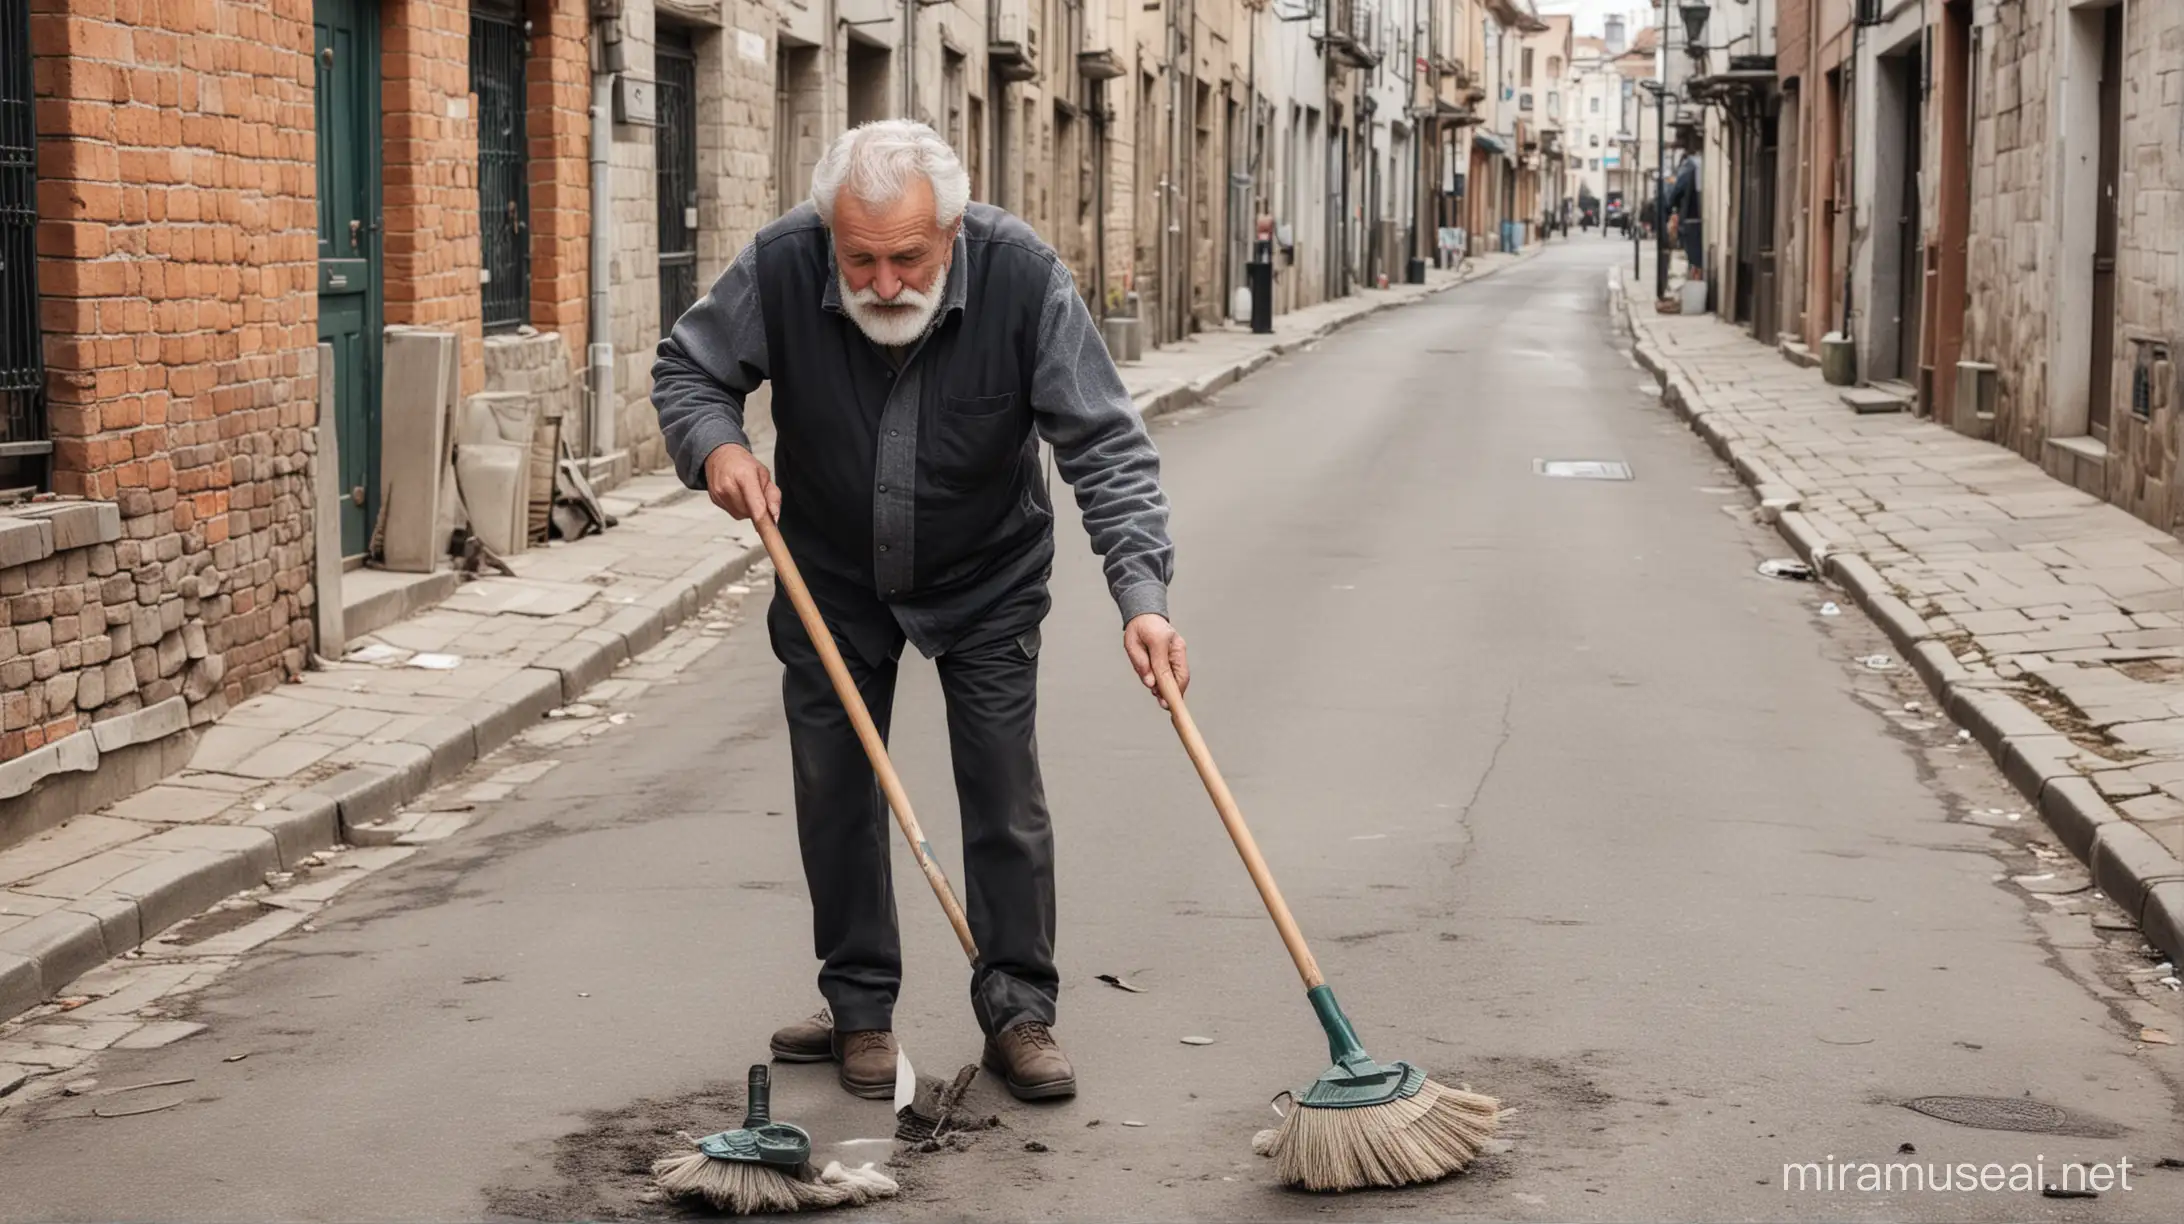 Elderly Man Cleaning Historic Cobblestone Street